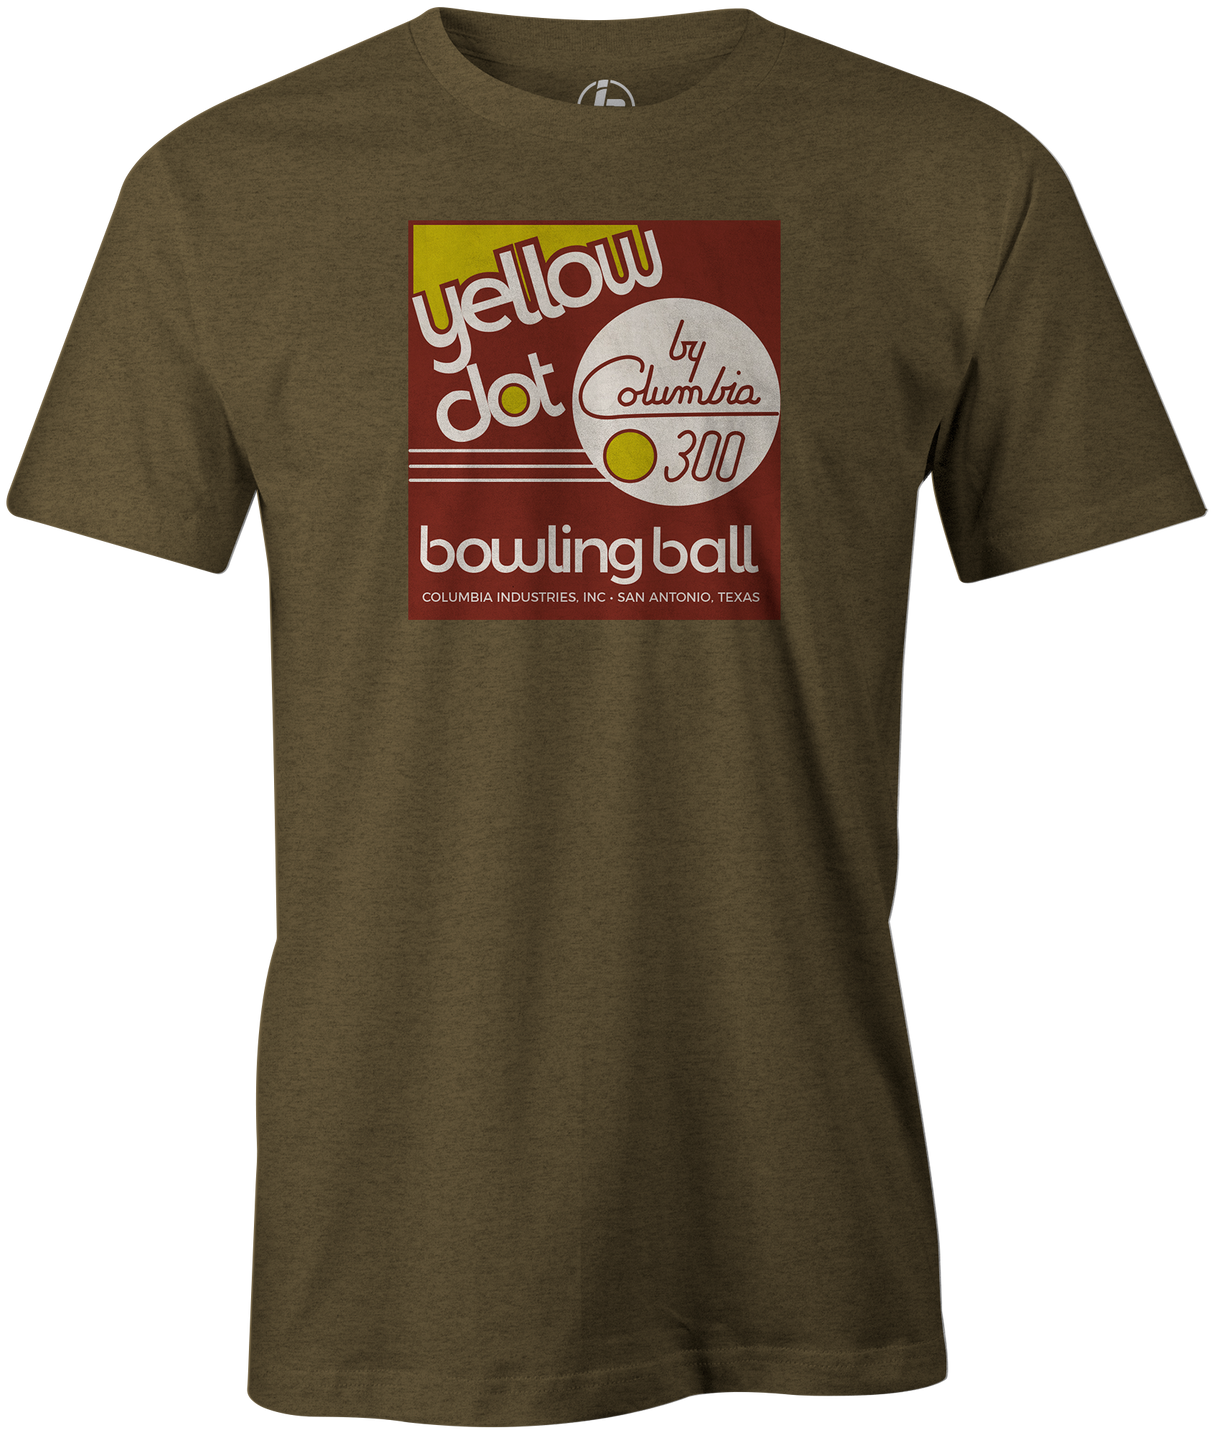 Yellow Dot Men's T-shirt, Army Green, Retro, Bowling, Tshirt, tee, tee-shirt, tee shirt. Bowling ball. Columbia 300.